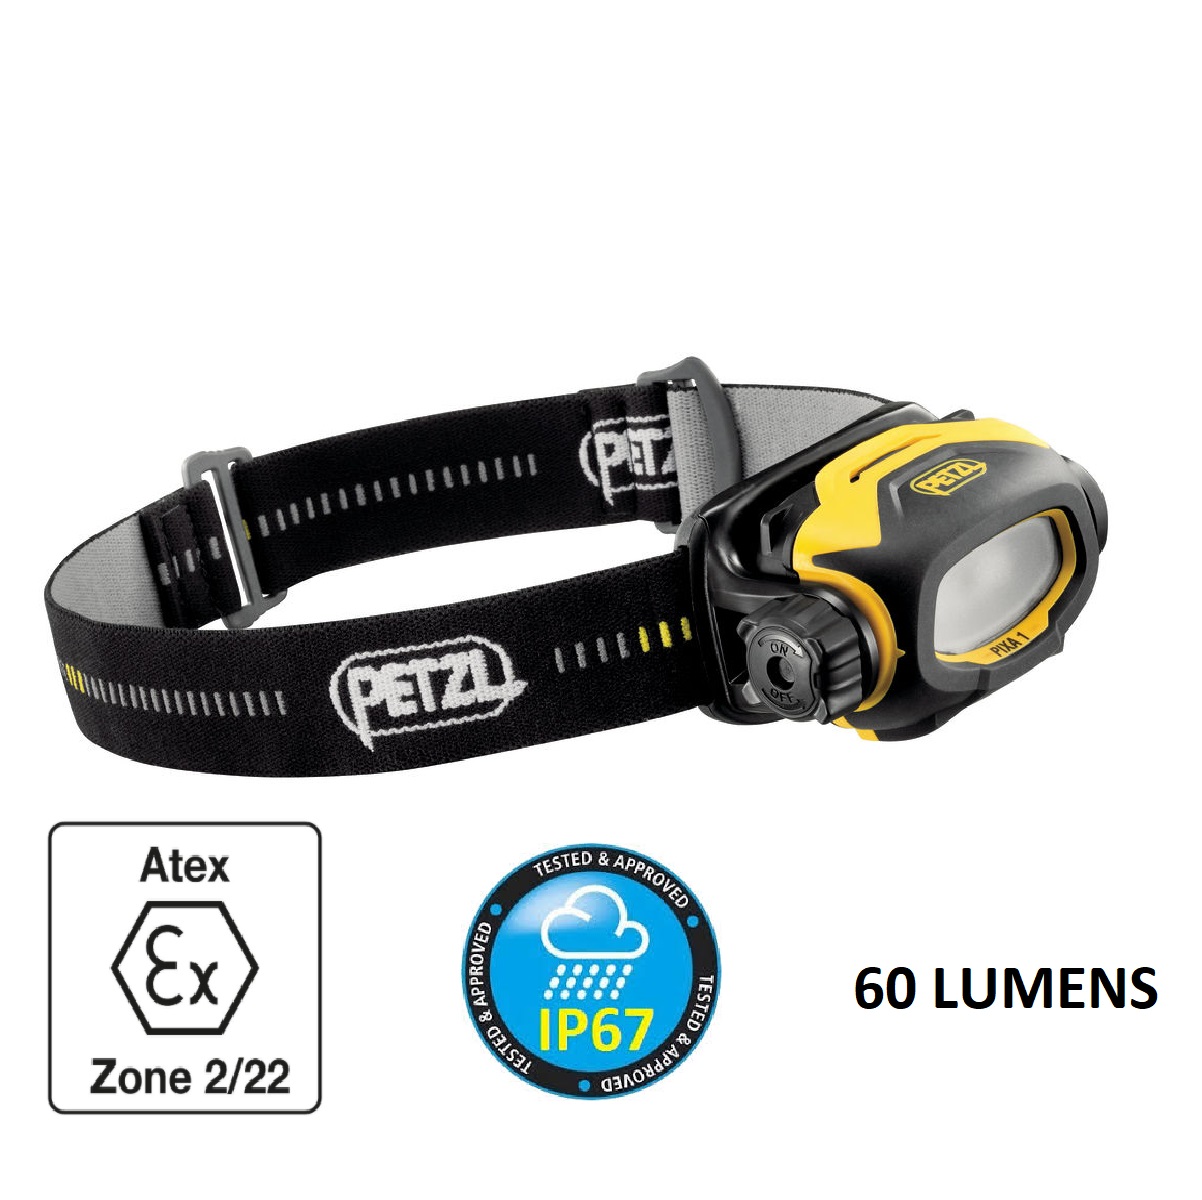 Petzl PIXA 1 LED 60 LUMENS ATEX Hazardous Environment Head Lamp 2 X AA Batteries Included